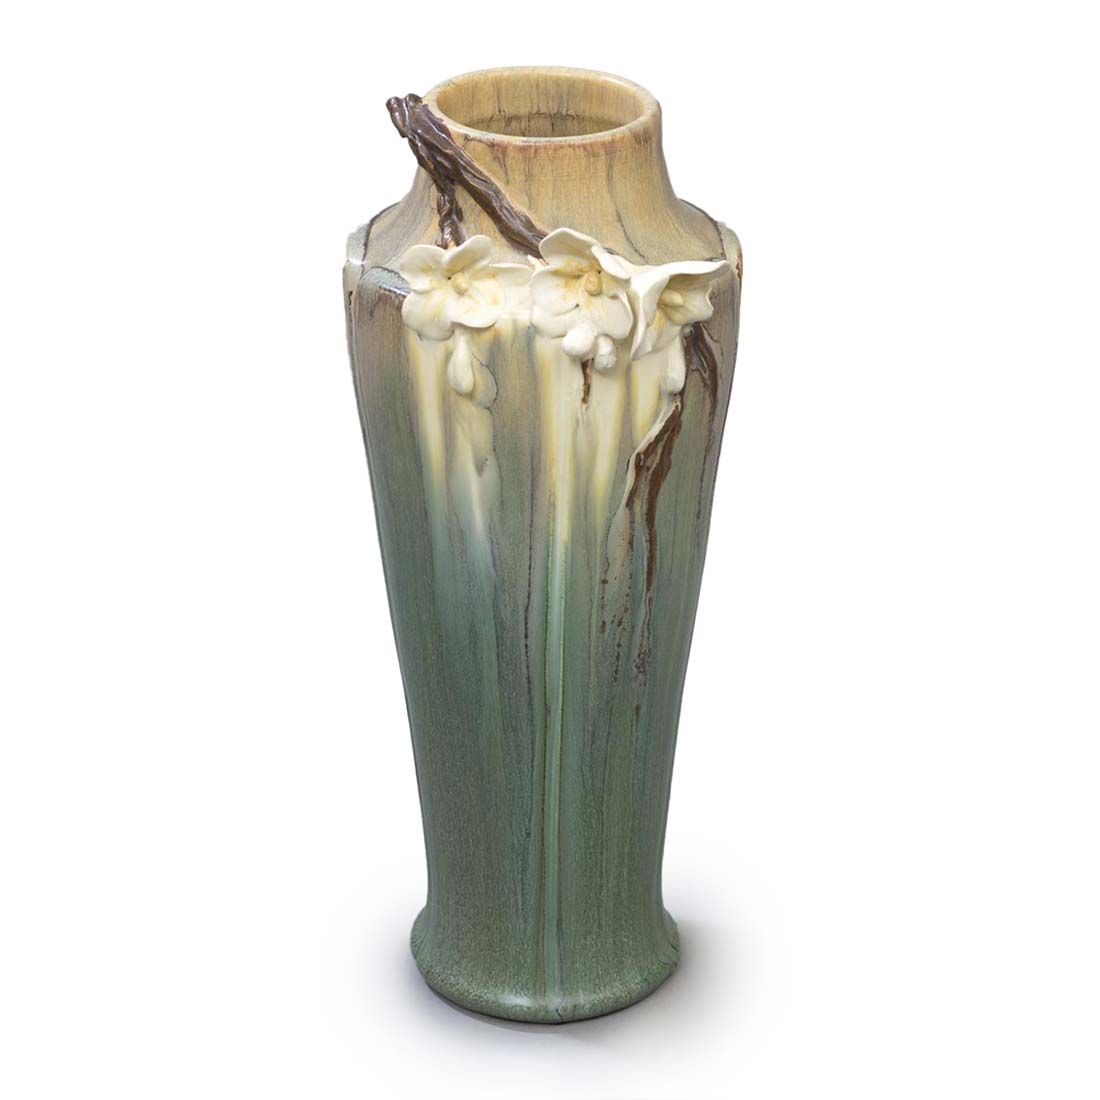 Blooming Branch Ceramic Pottery Vase